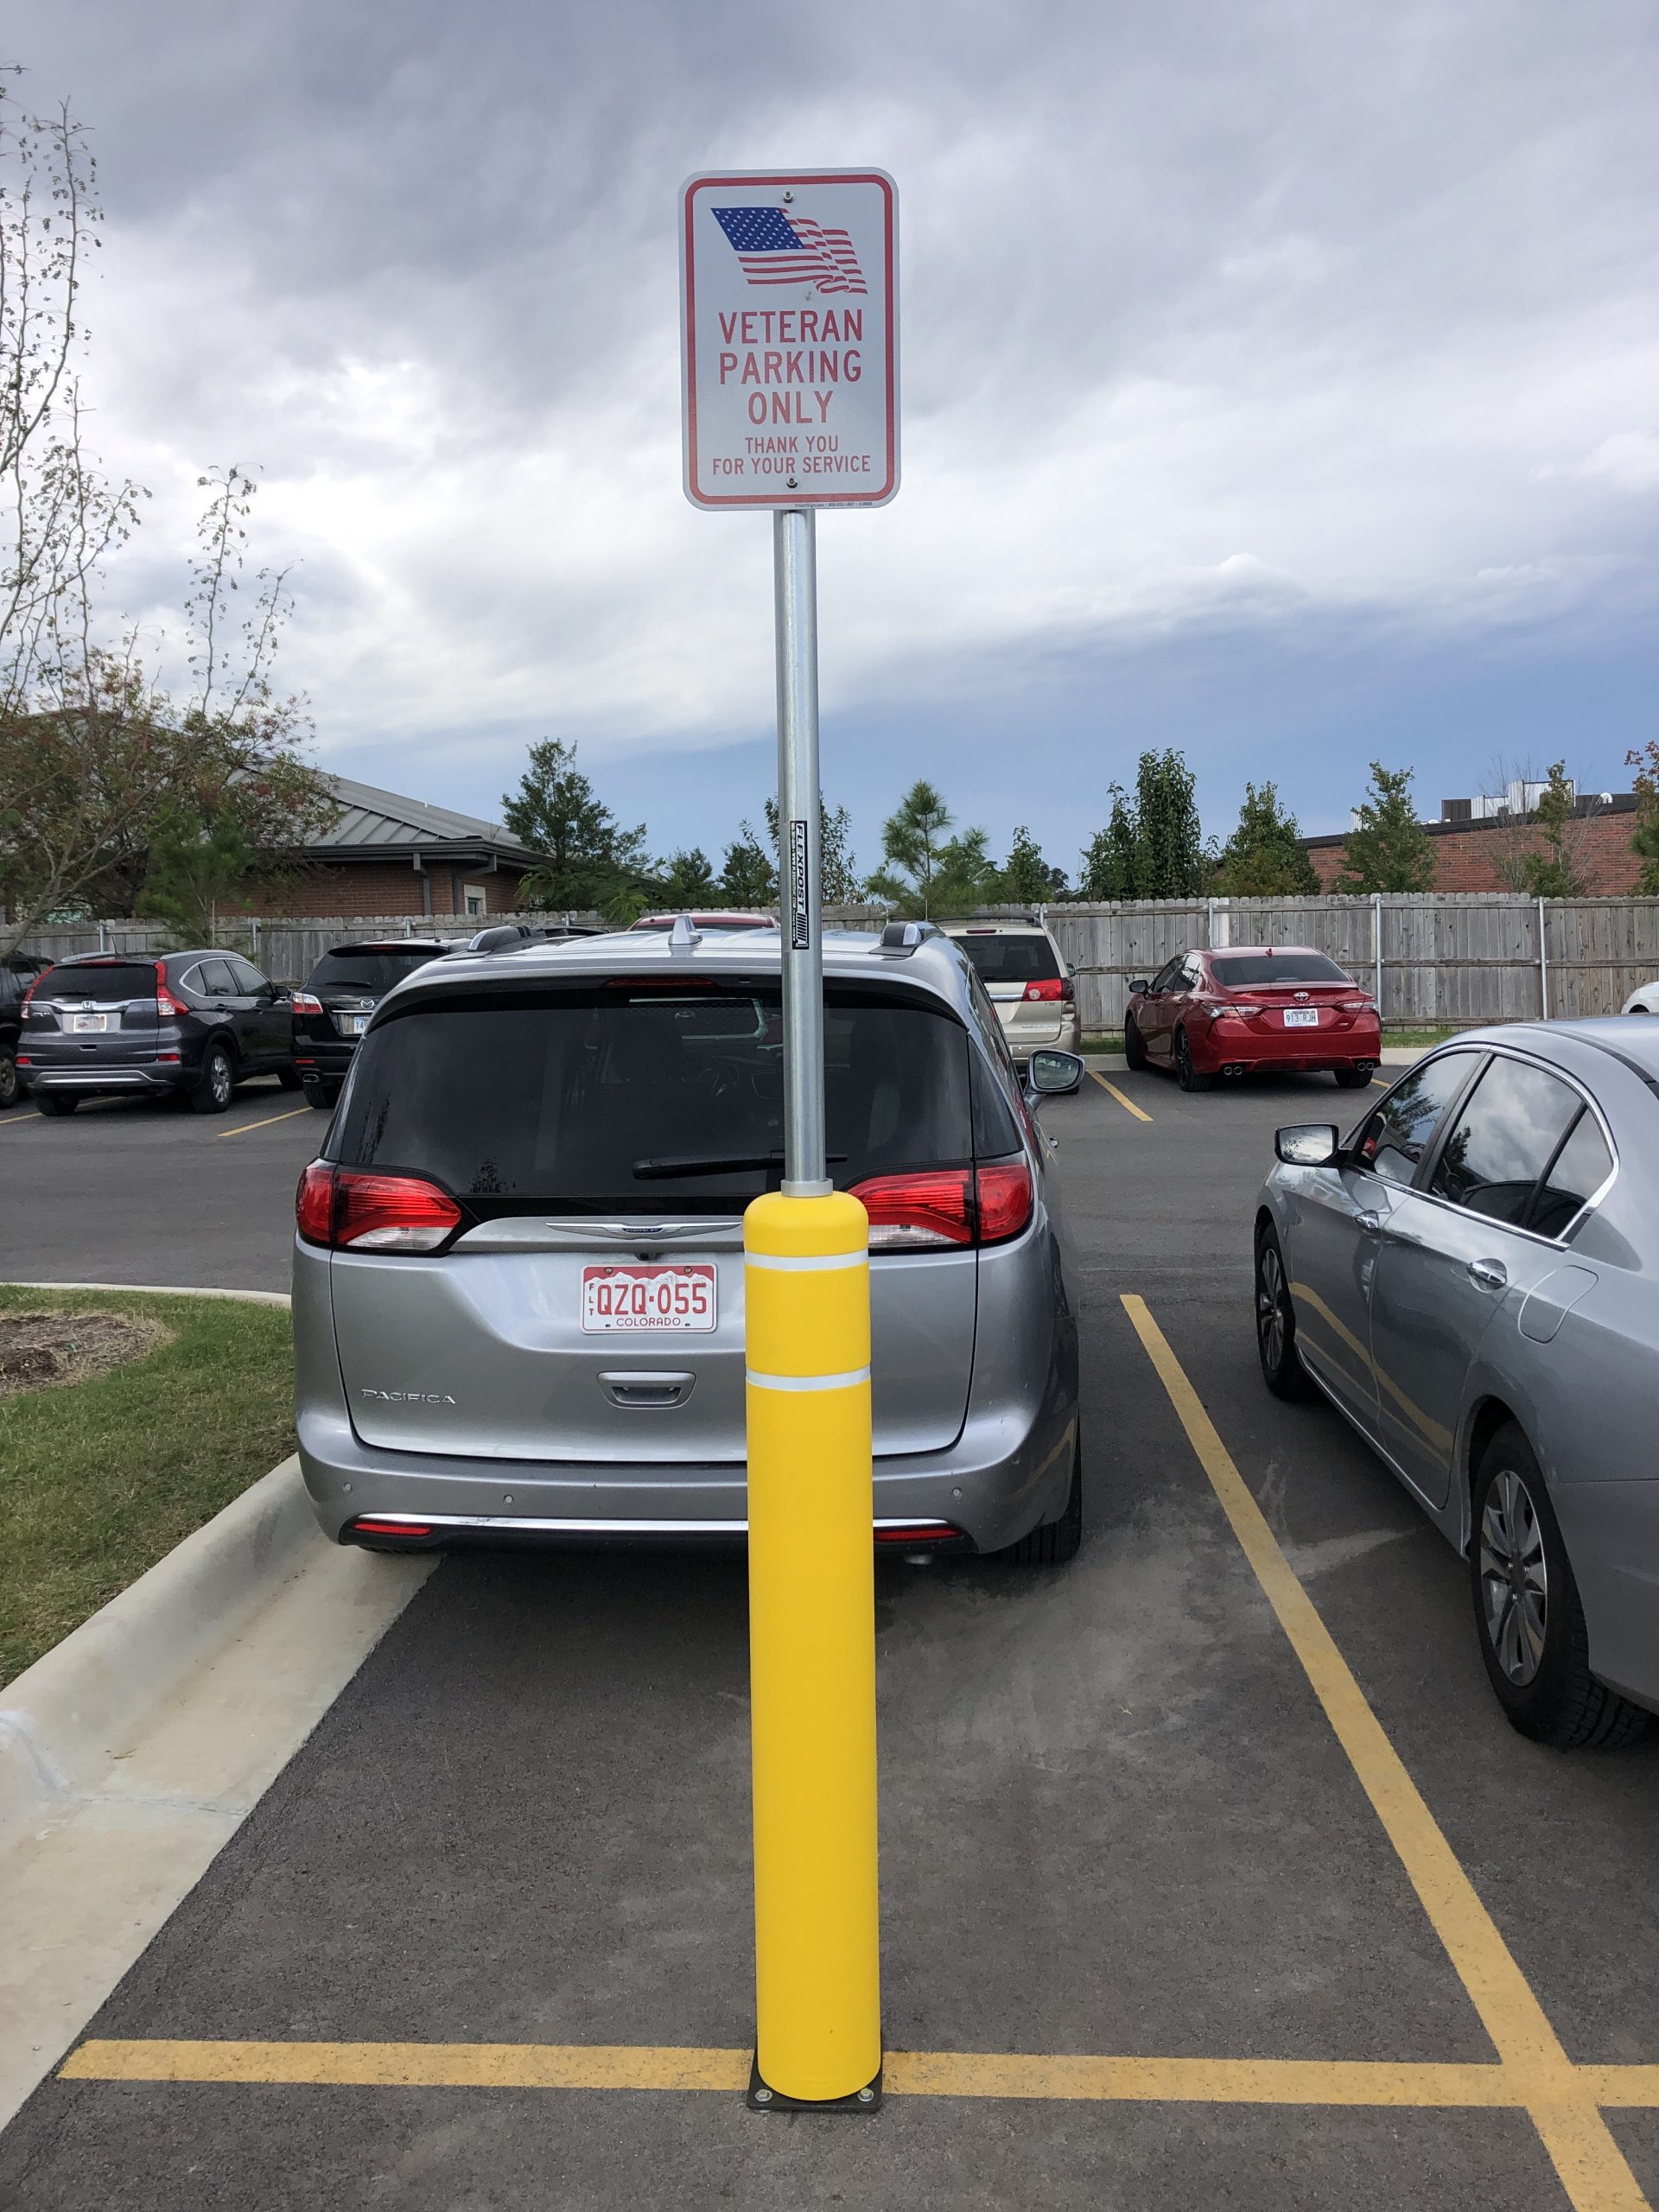 Wal-Mart - Veteran's Parking